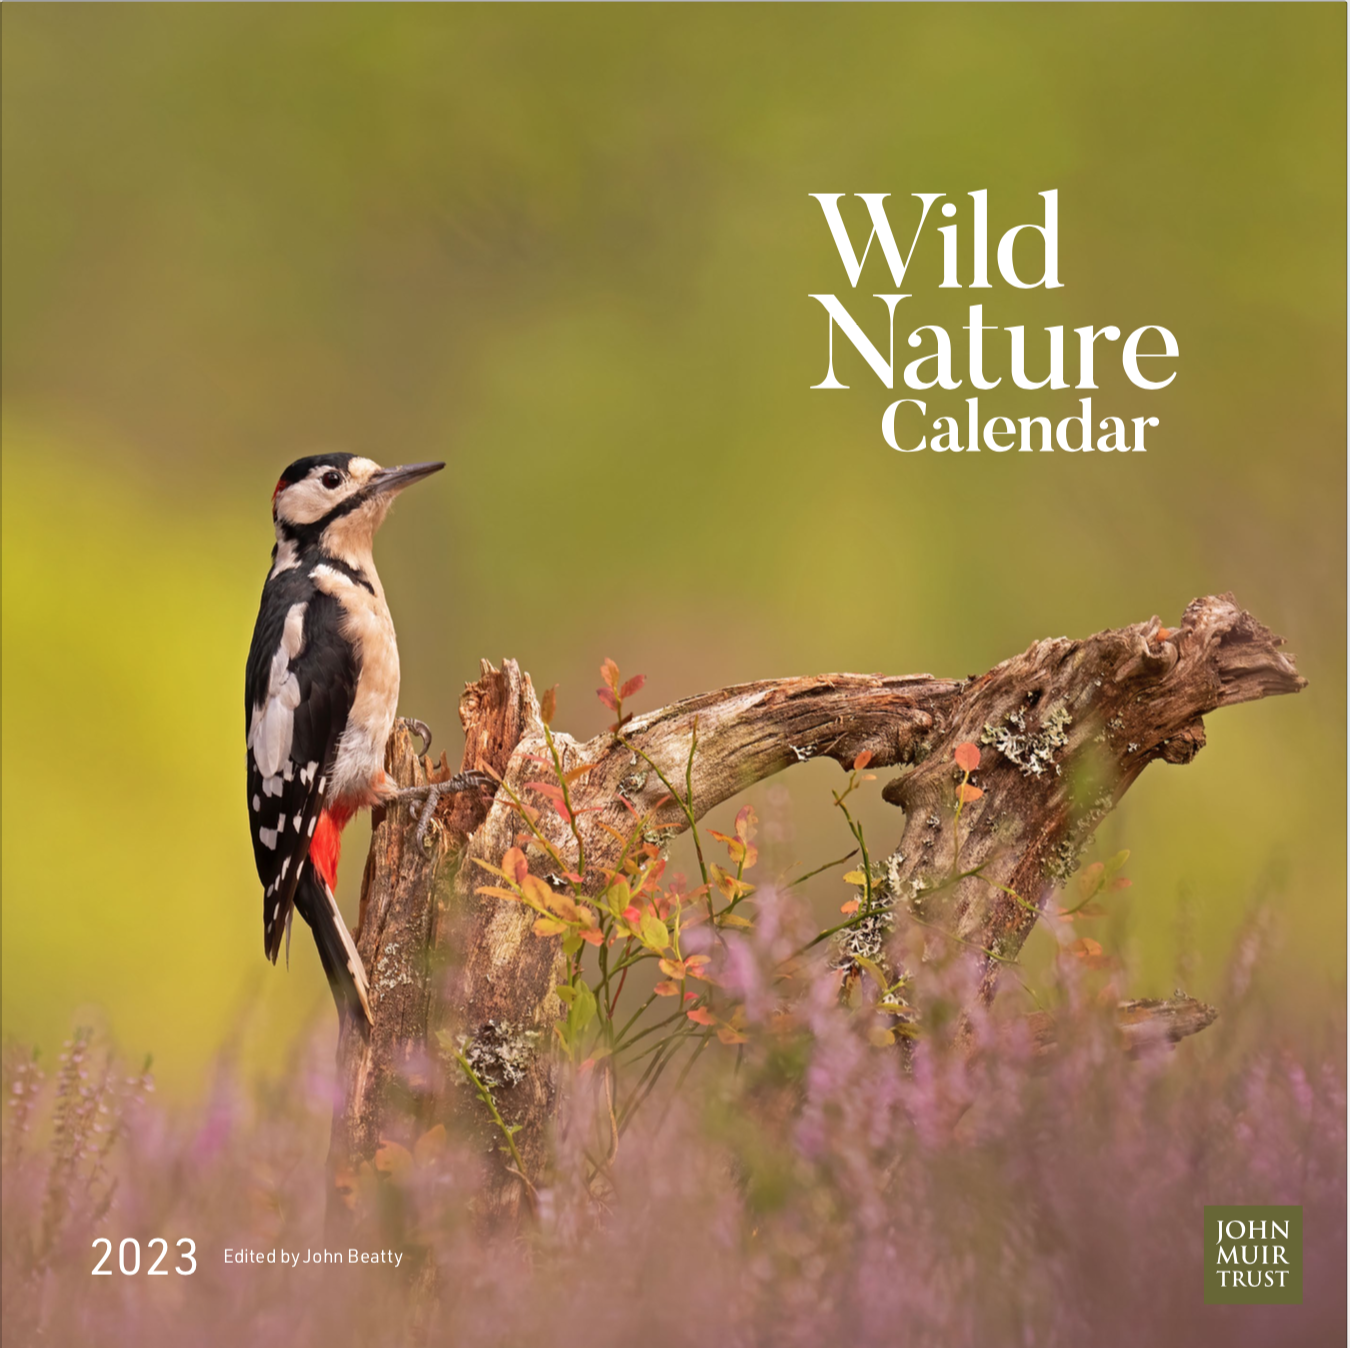 Wild Nature Calendar Cover 2023